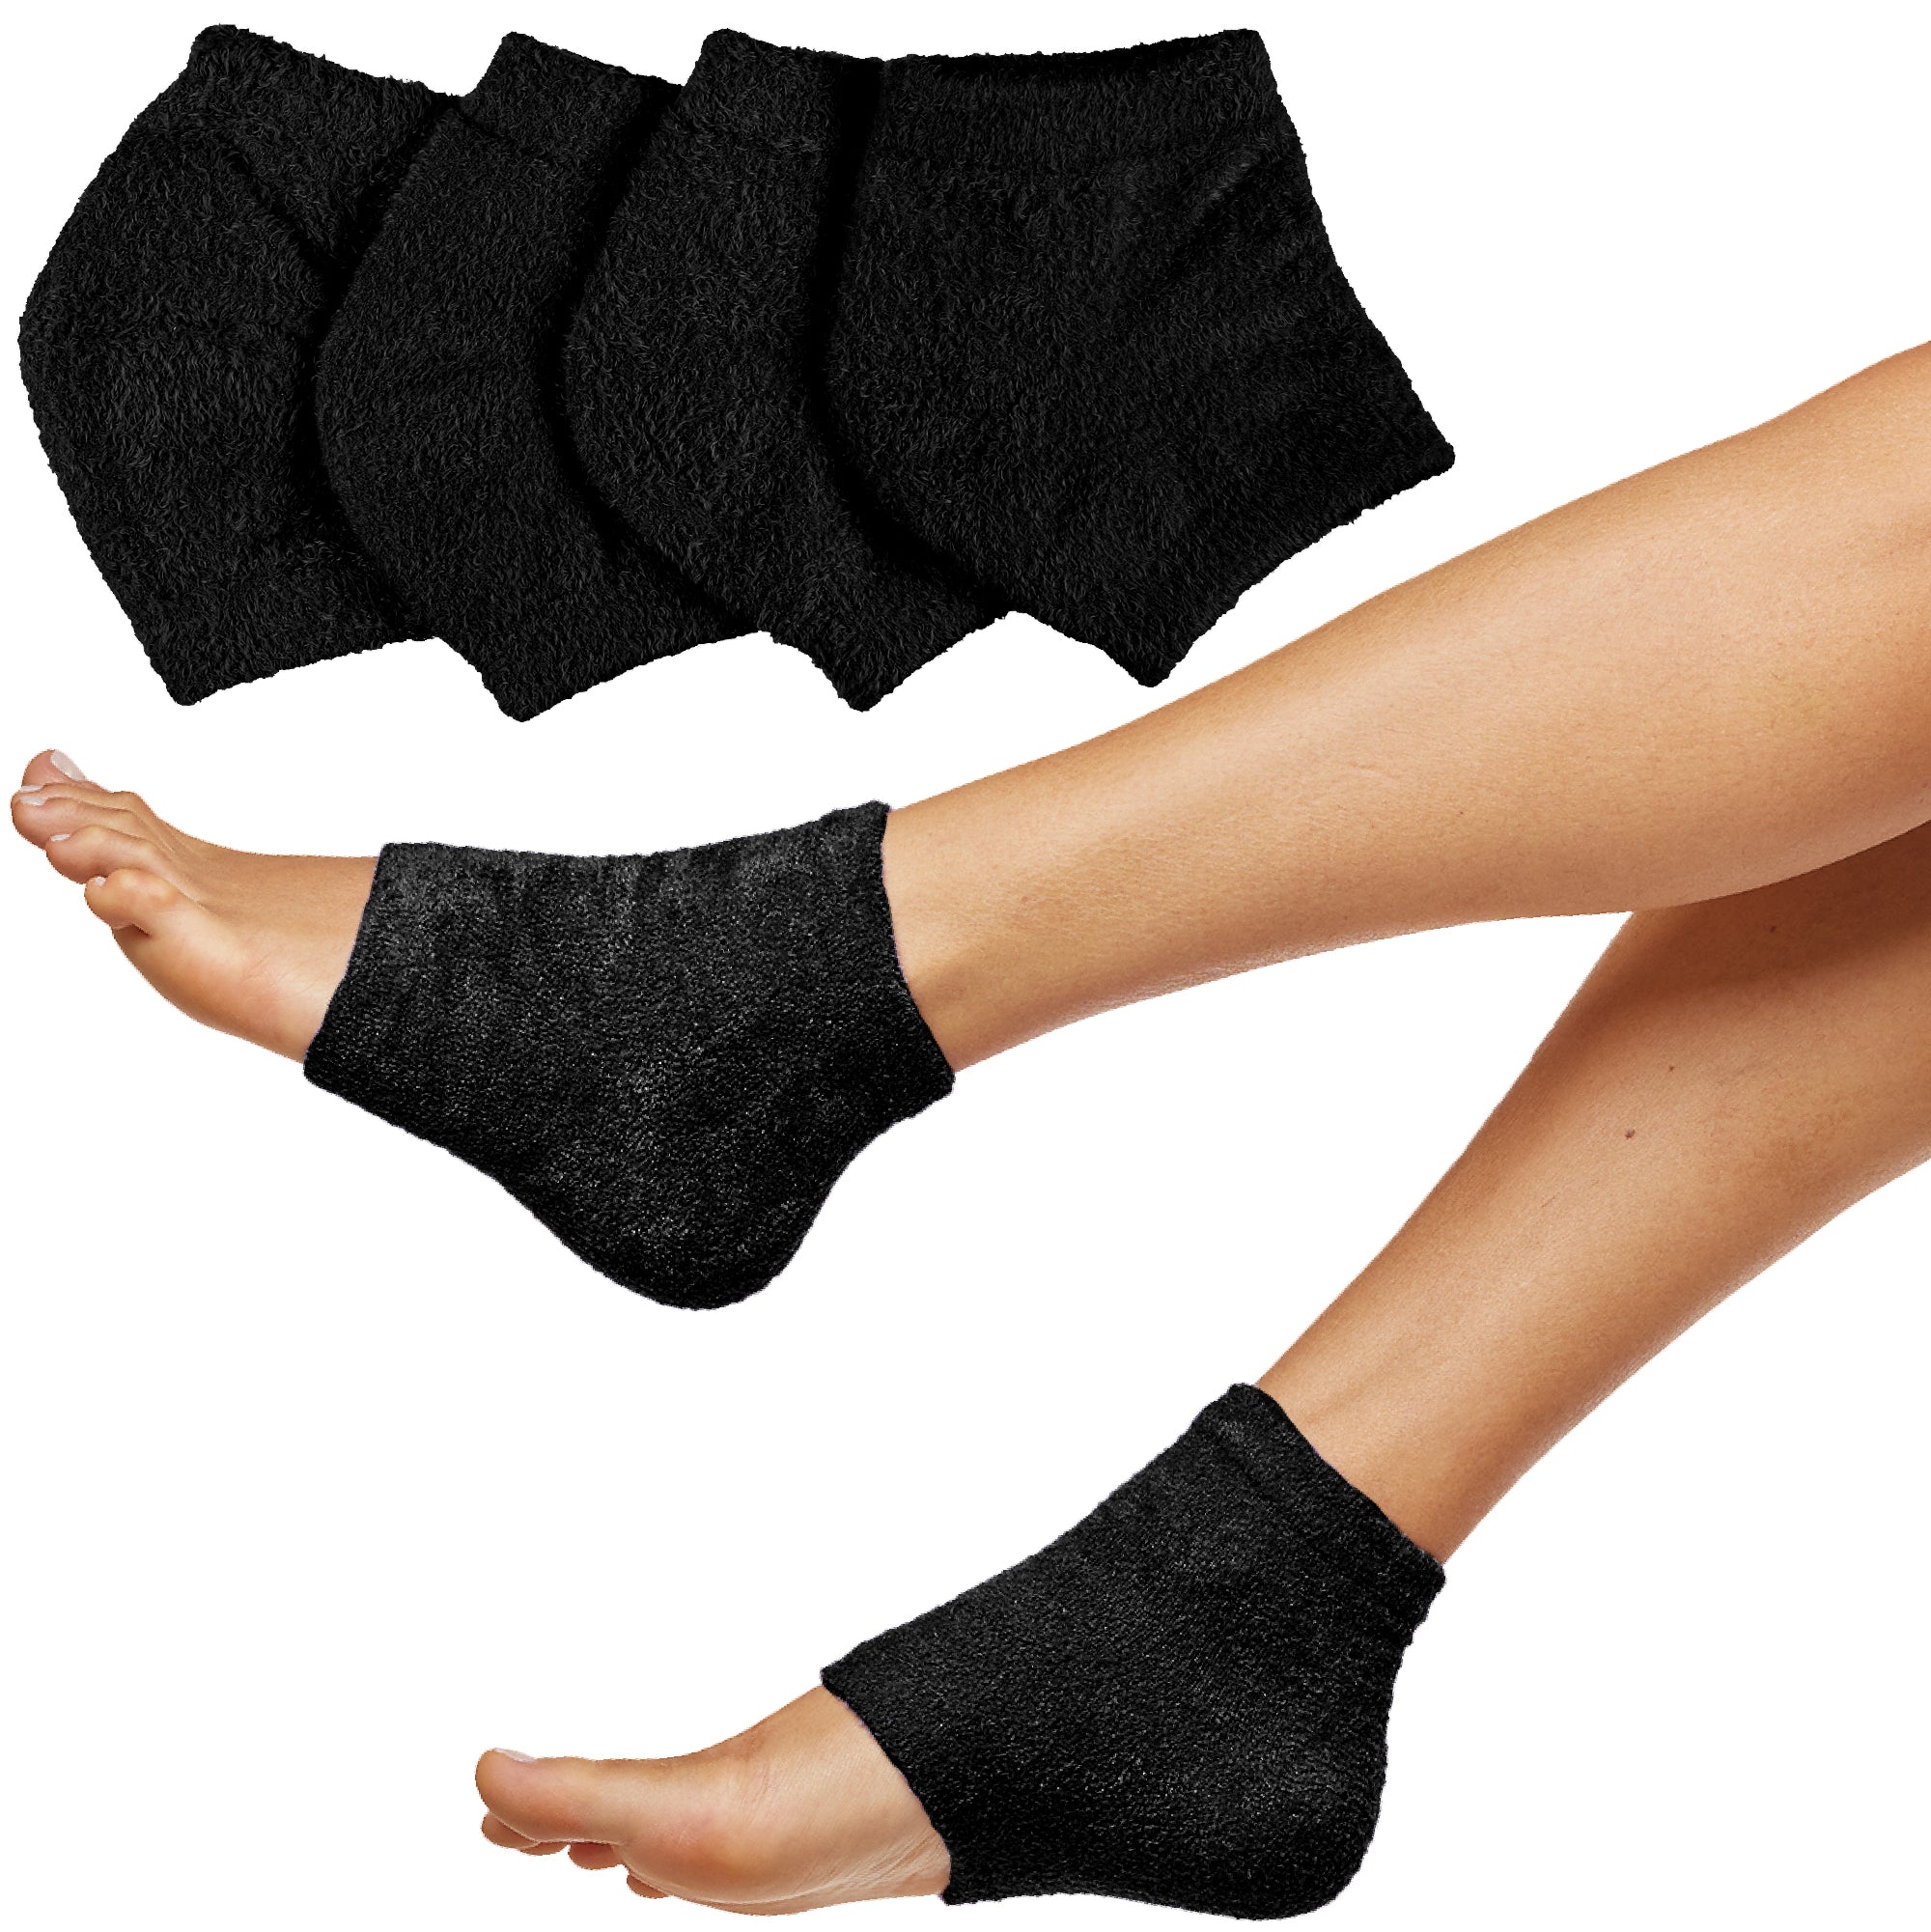 Padded Ankle Walking Socks - Pure Athlete